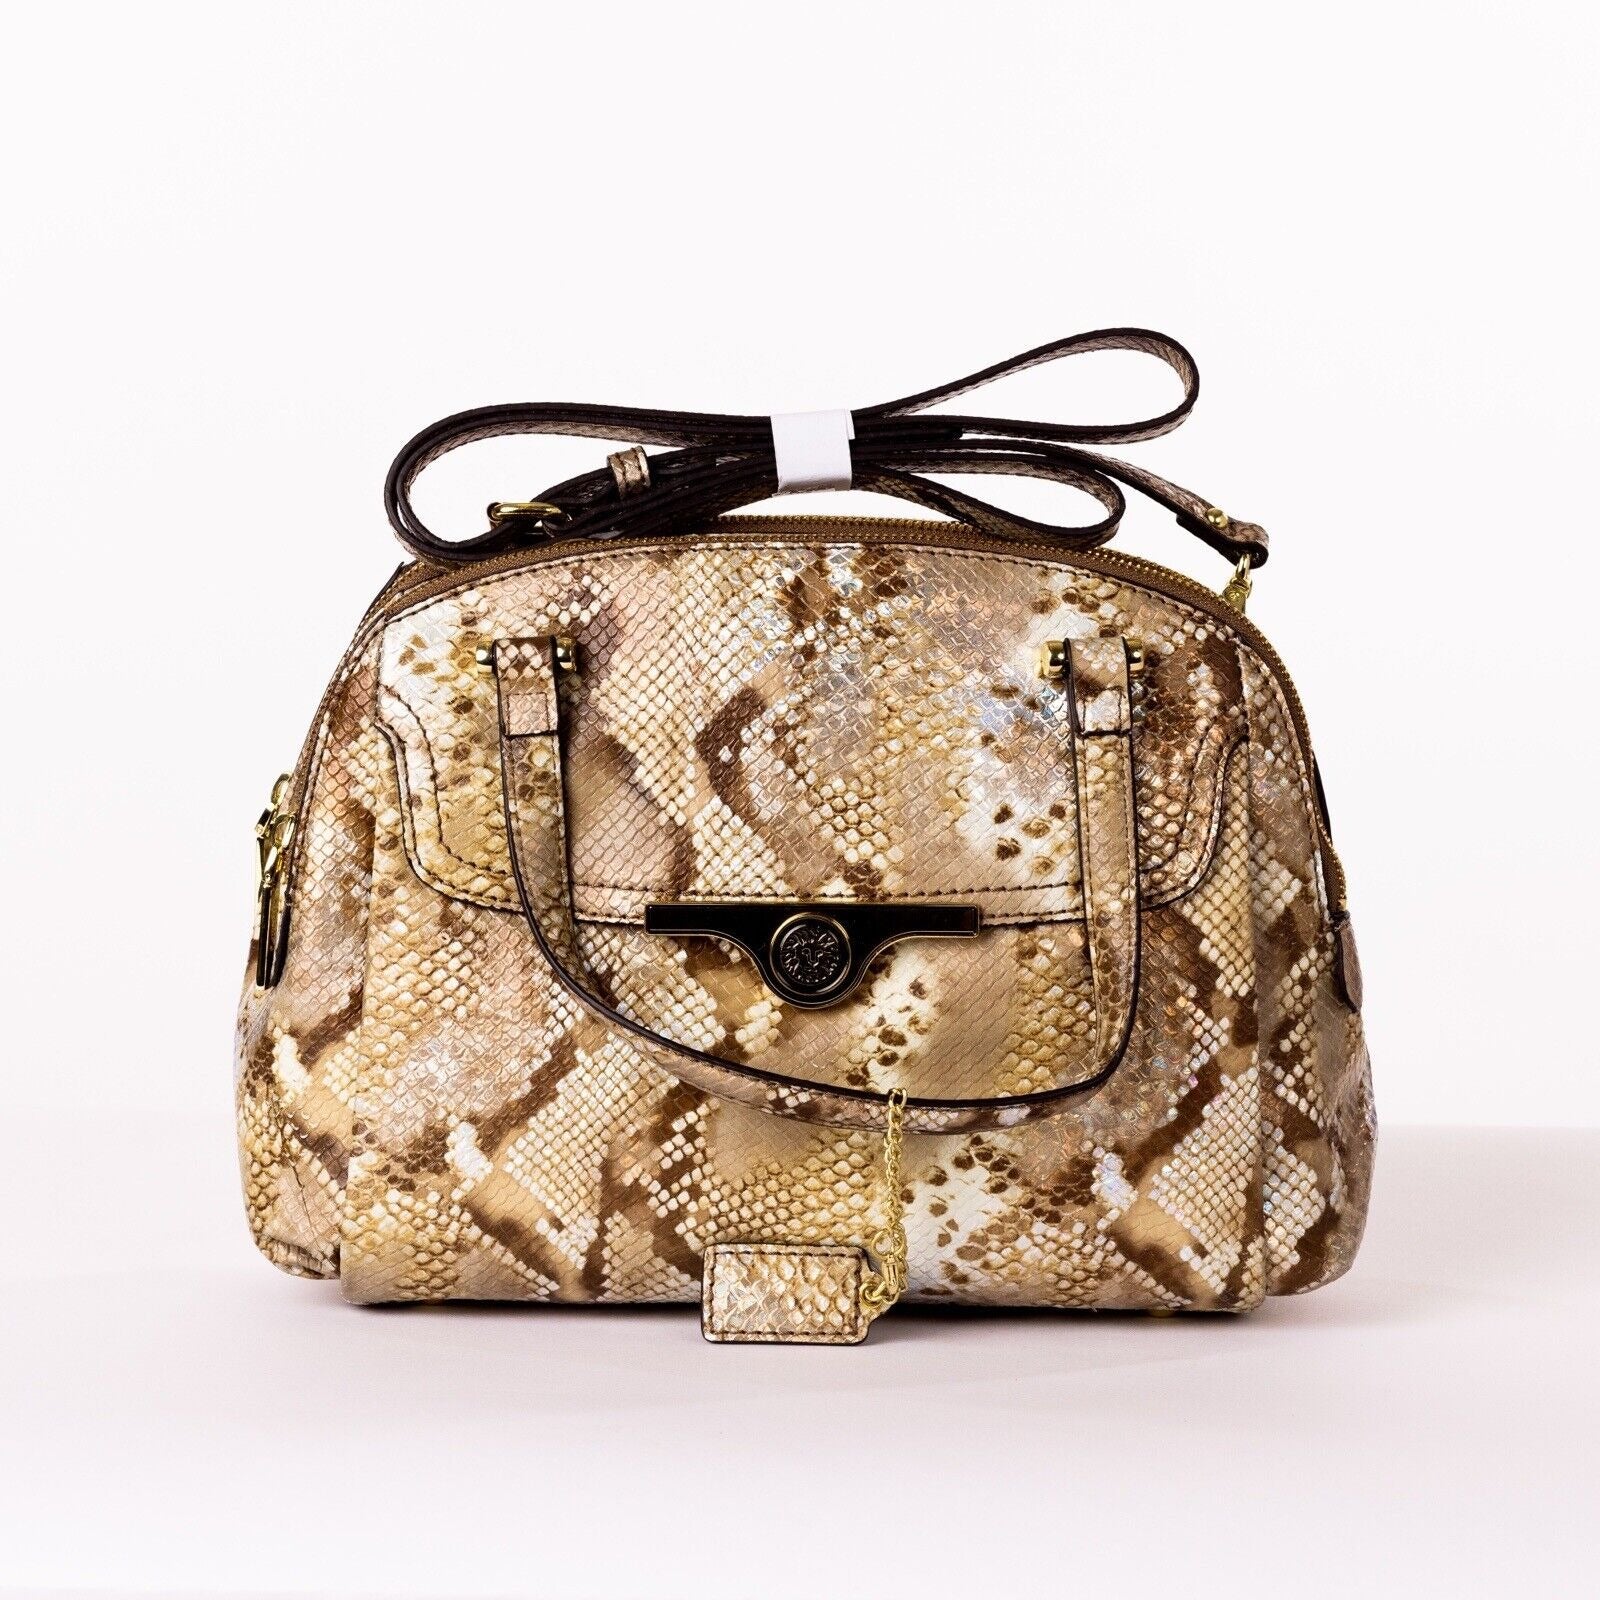 Brown Python Printed Handbag With Gold Hardware And Adjustable Strap